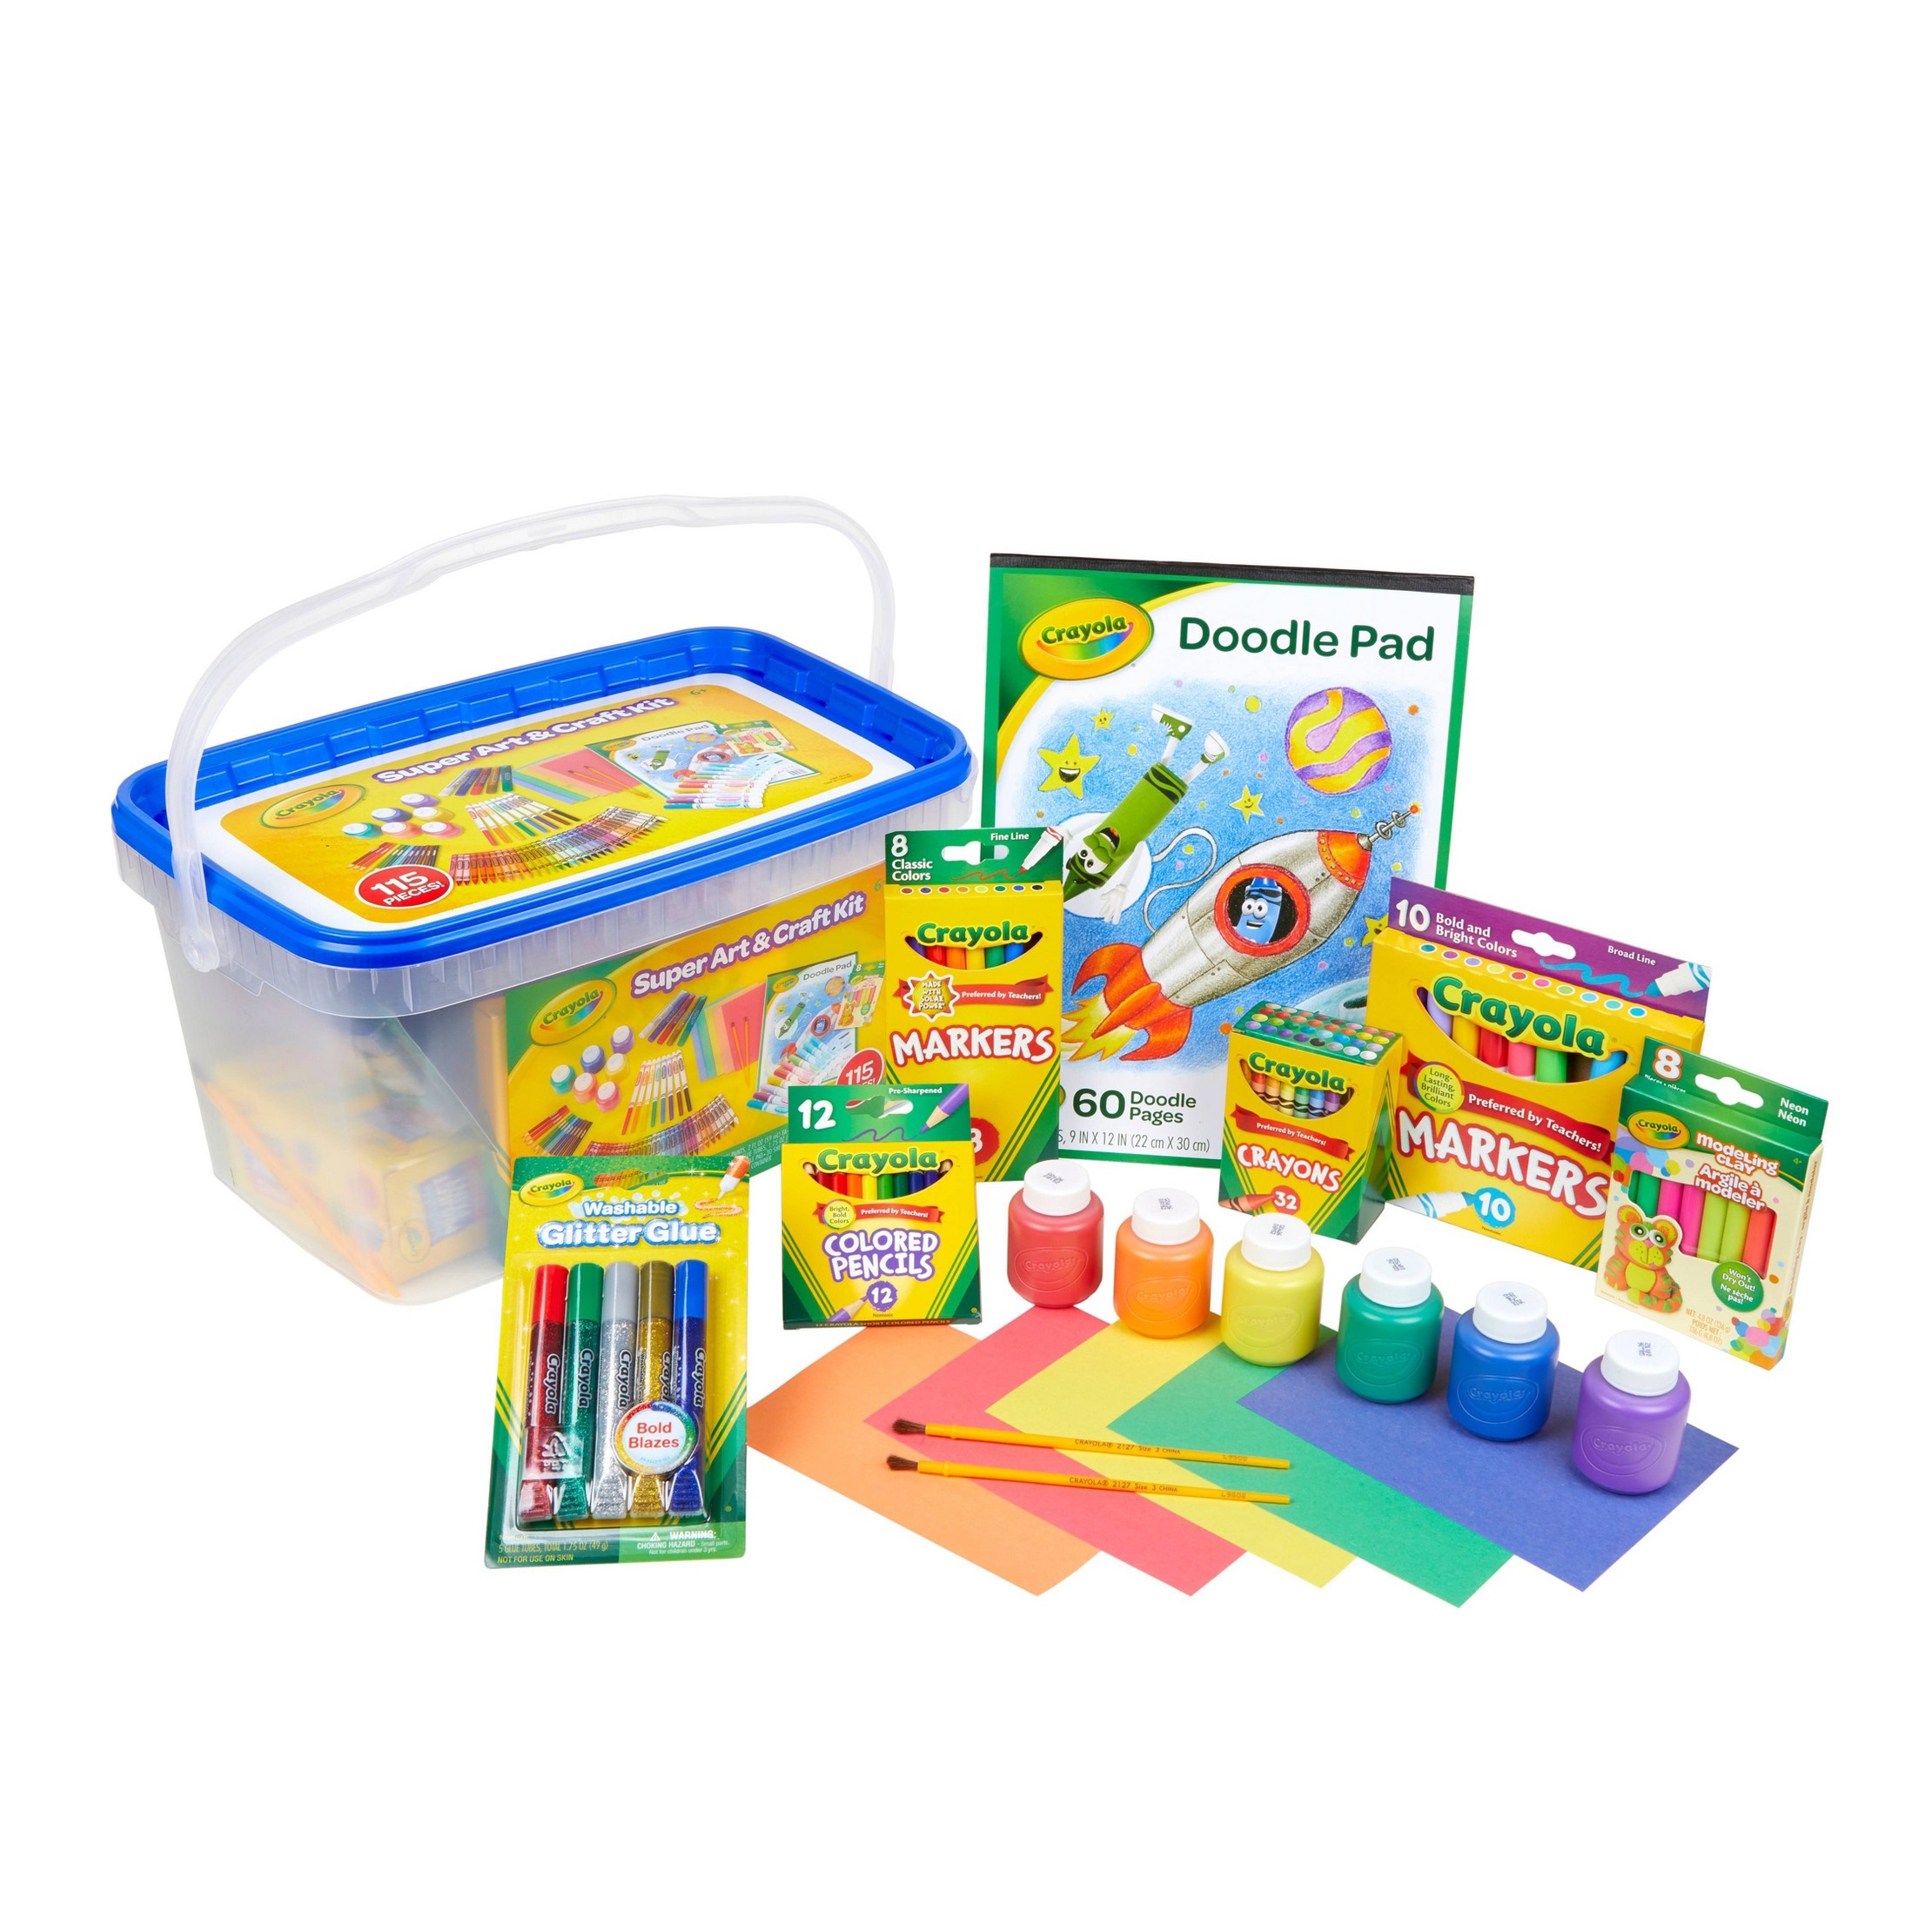 School/Craft Supplies Kits: 50% Off: 52-Count Sharpie Permanent Markers Holiday 2022 Set $19.99, 115-Piece Crayola Kid's Super Art & Craft Kit $14.99 & More via Target